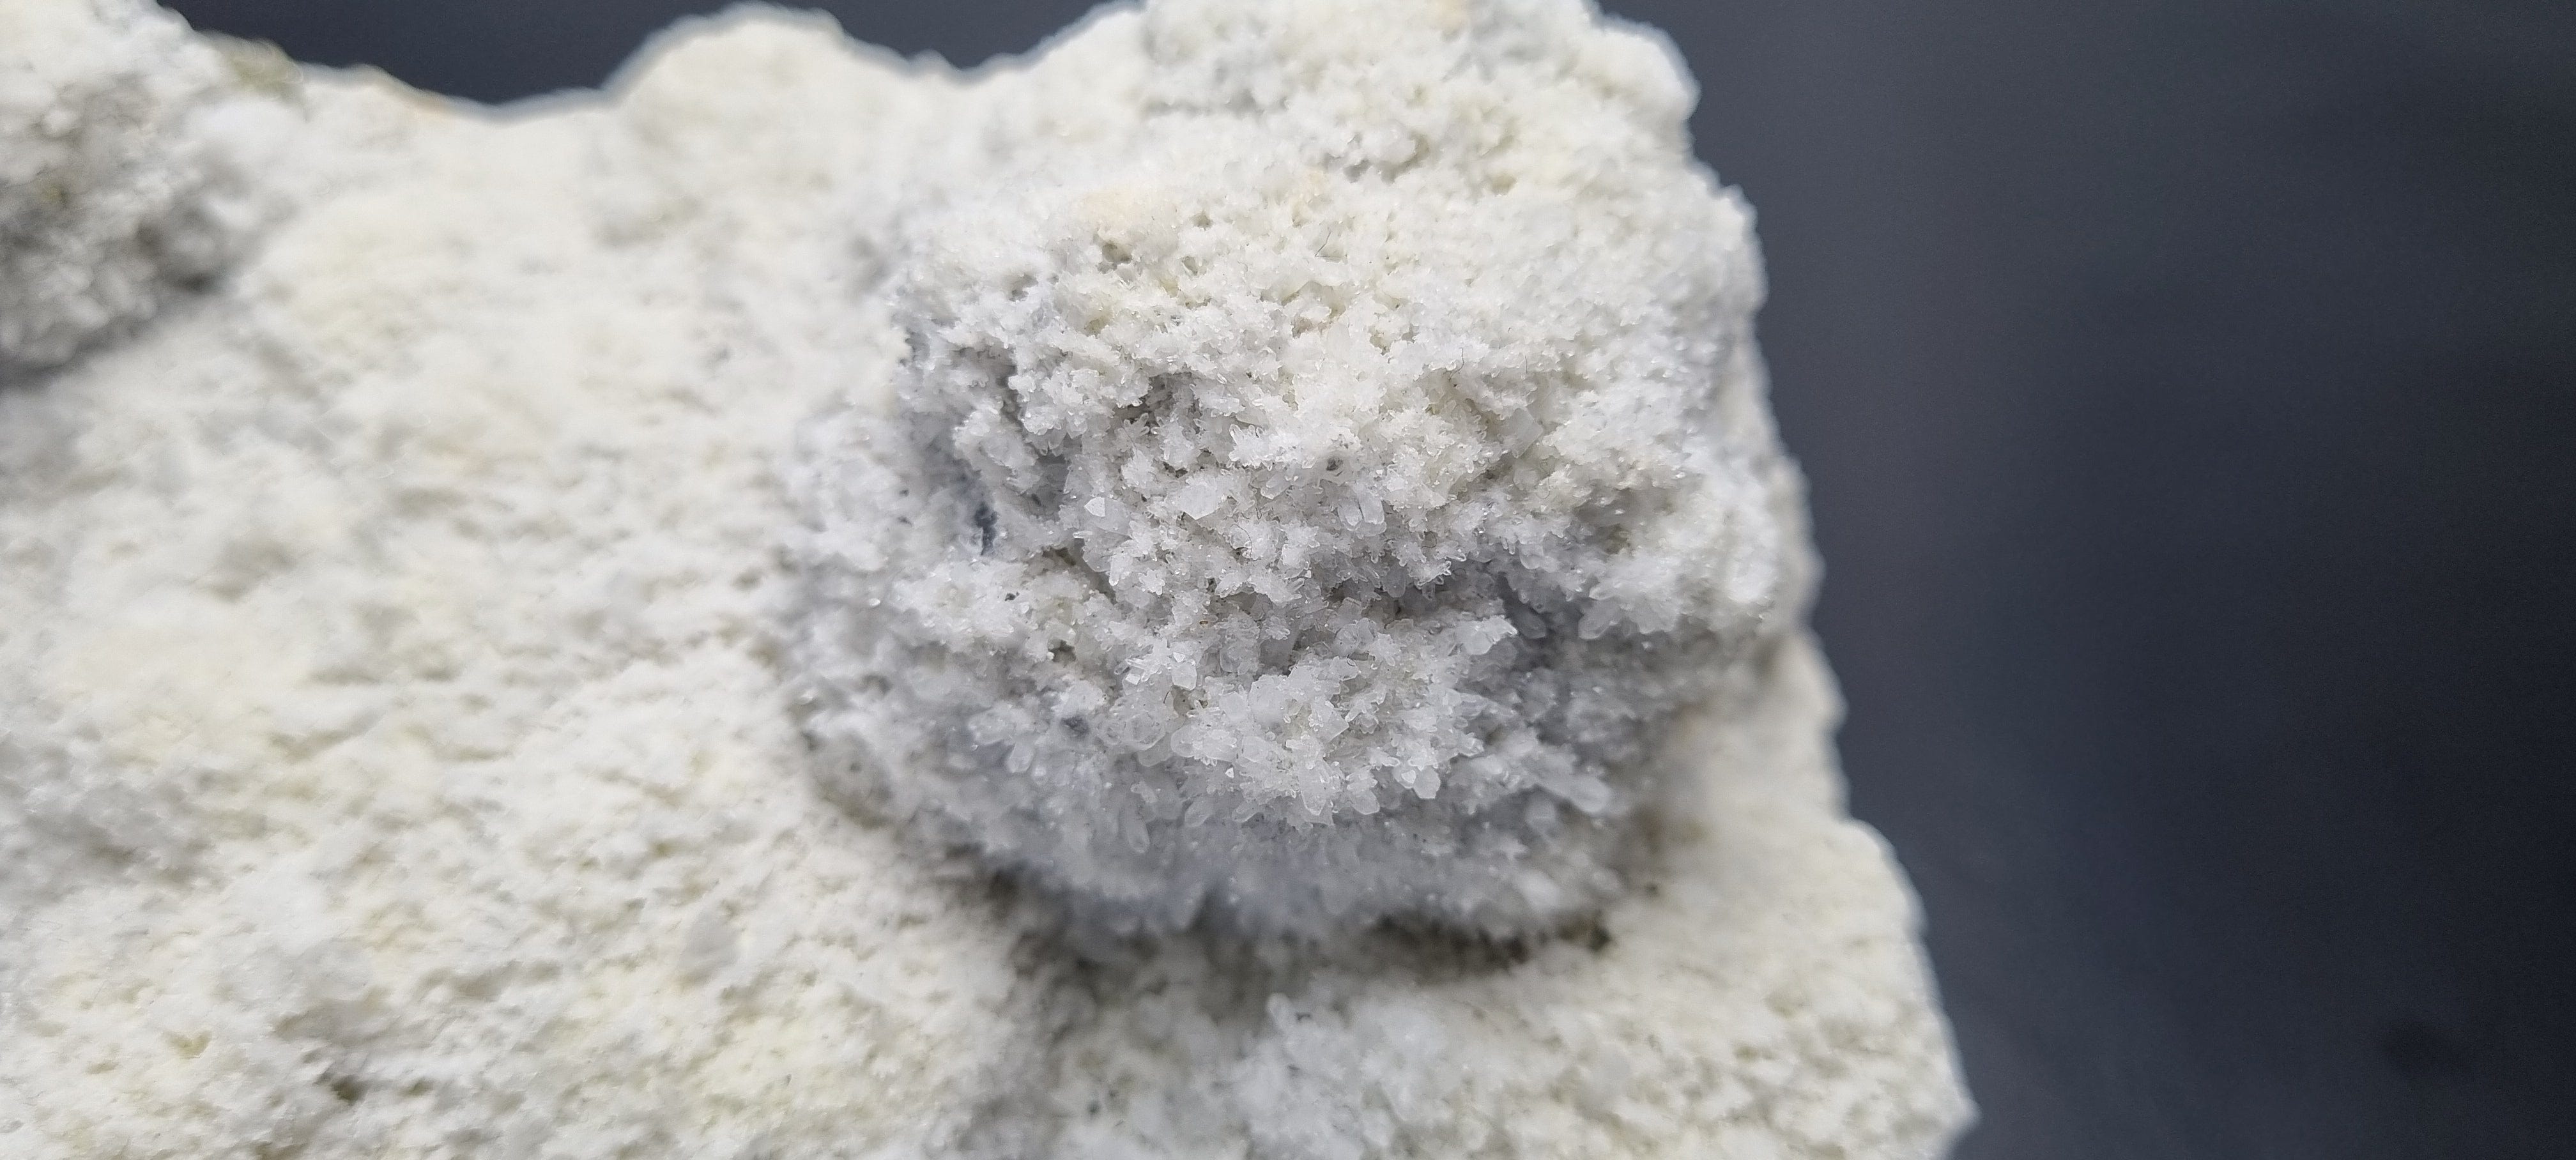 Sugar Quartz on Pyrite on a Sphalerite Matrix